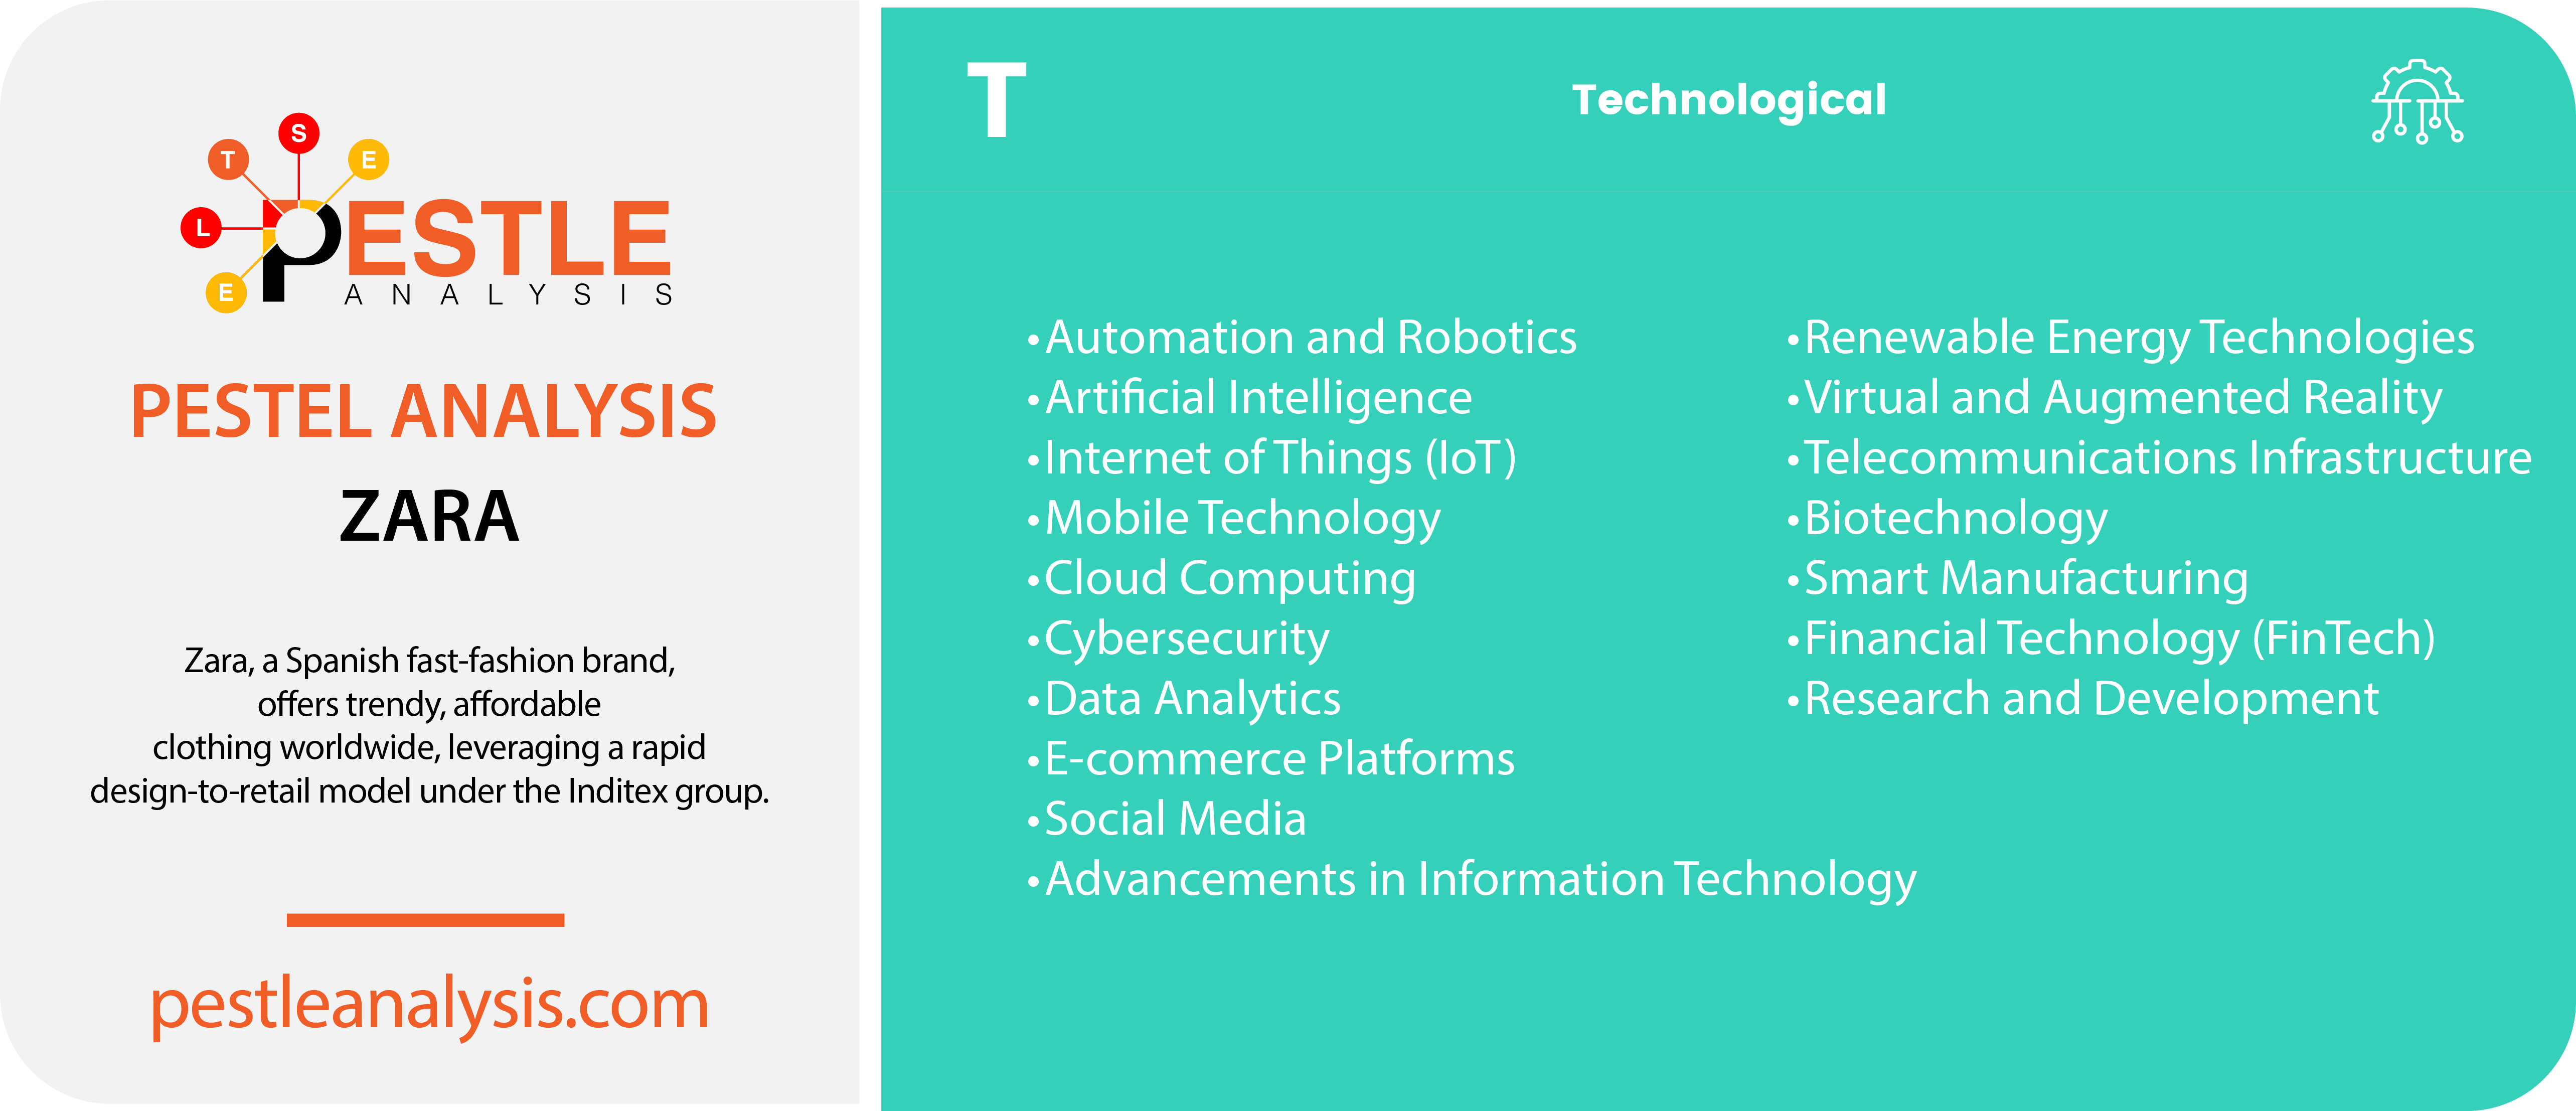 zara-pestle-analysis-technological-factors-template